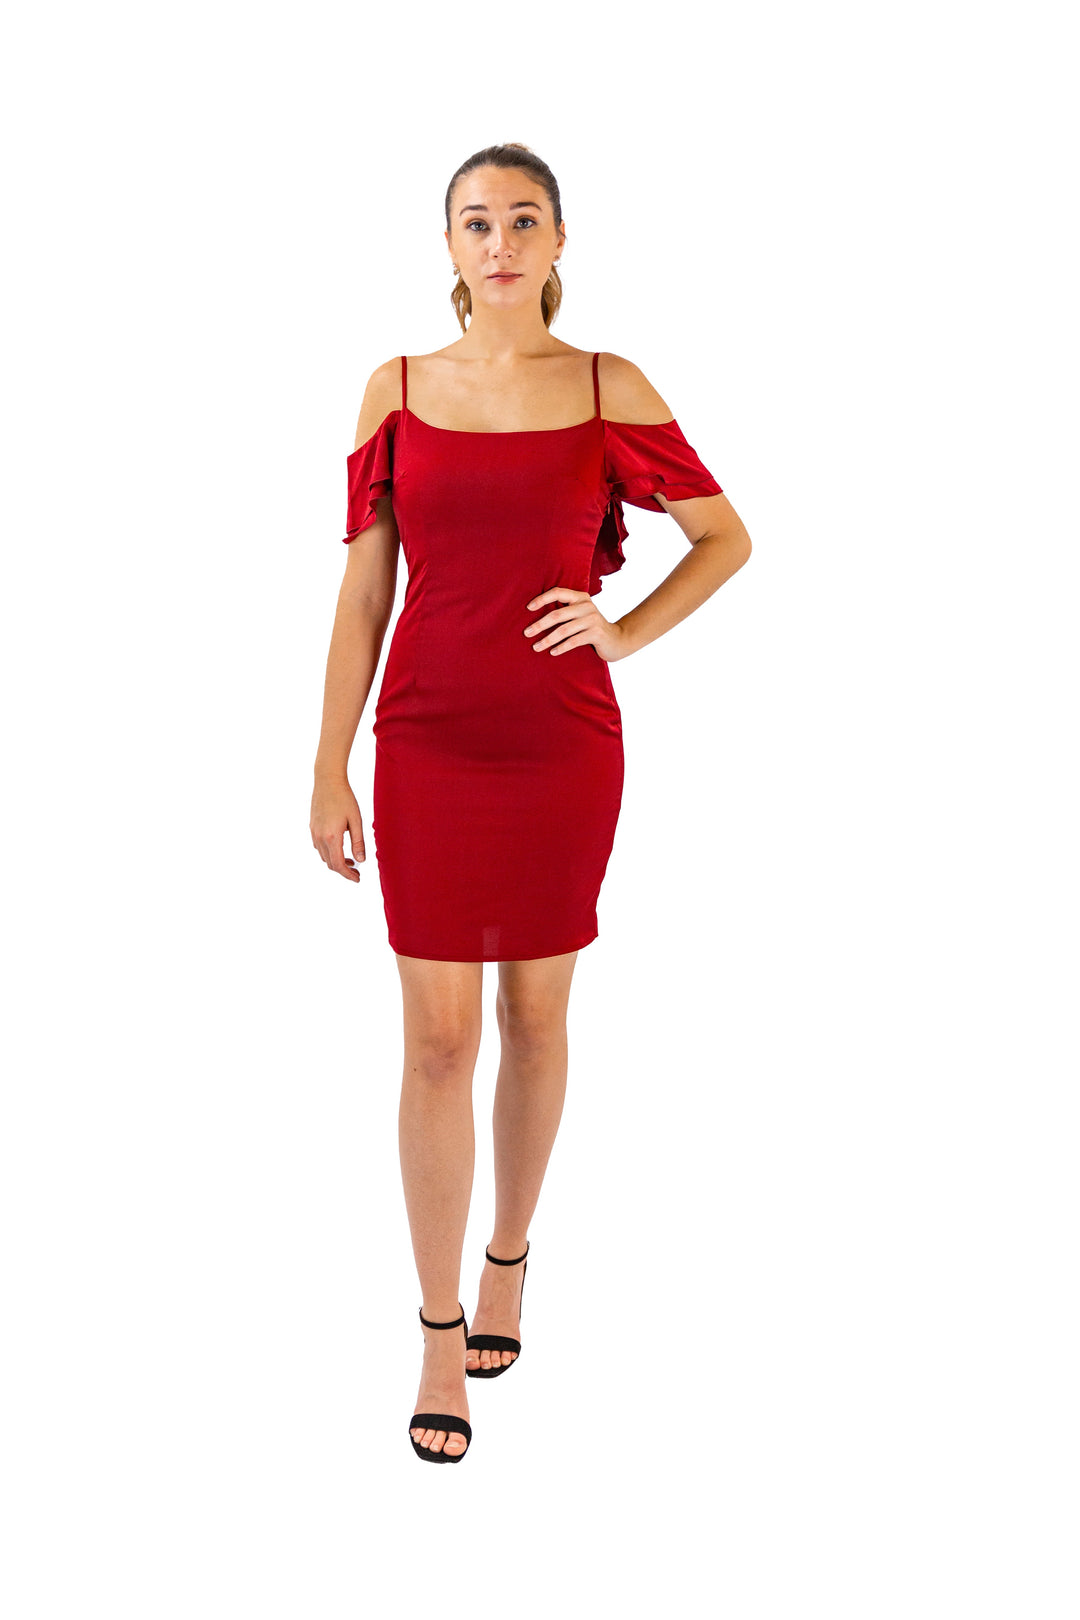 Fabonics Scarlet Allure Red Cold Shoulder Midi Dress with Ruffle Detail for Elegant Evening Wear